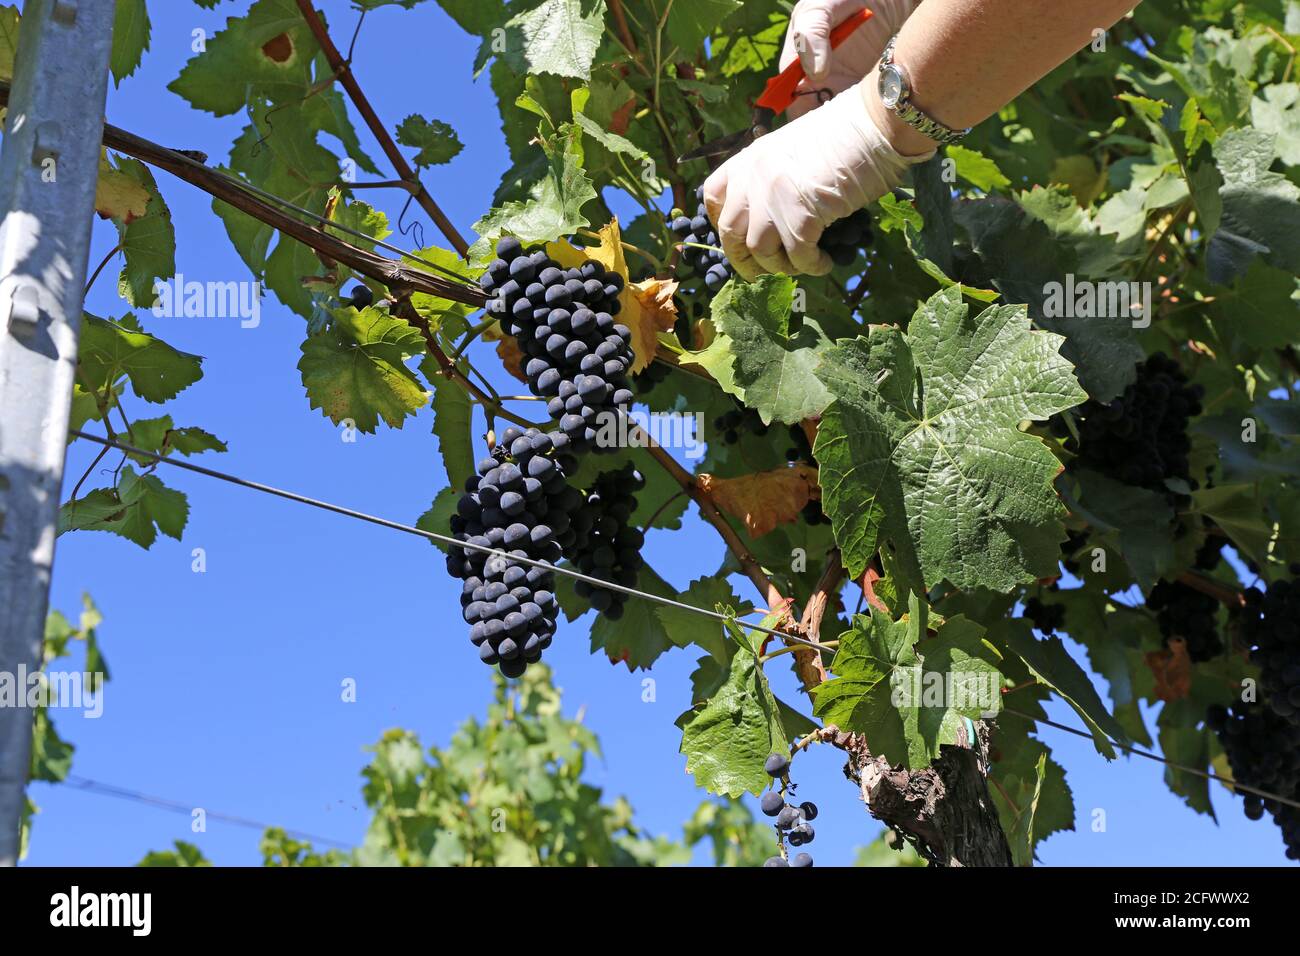 Manual grape harvesting, hand harvesting Stock Photo